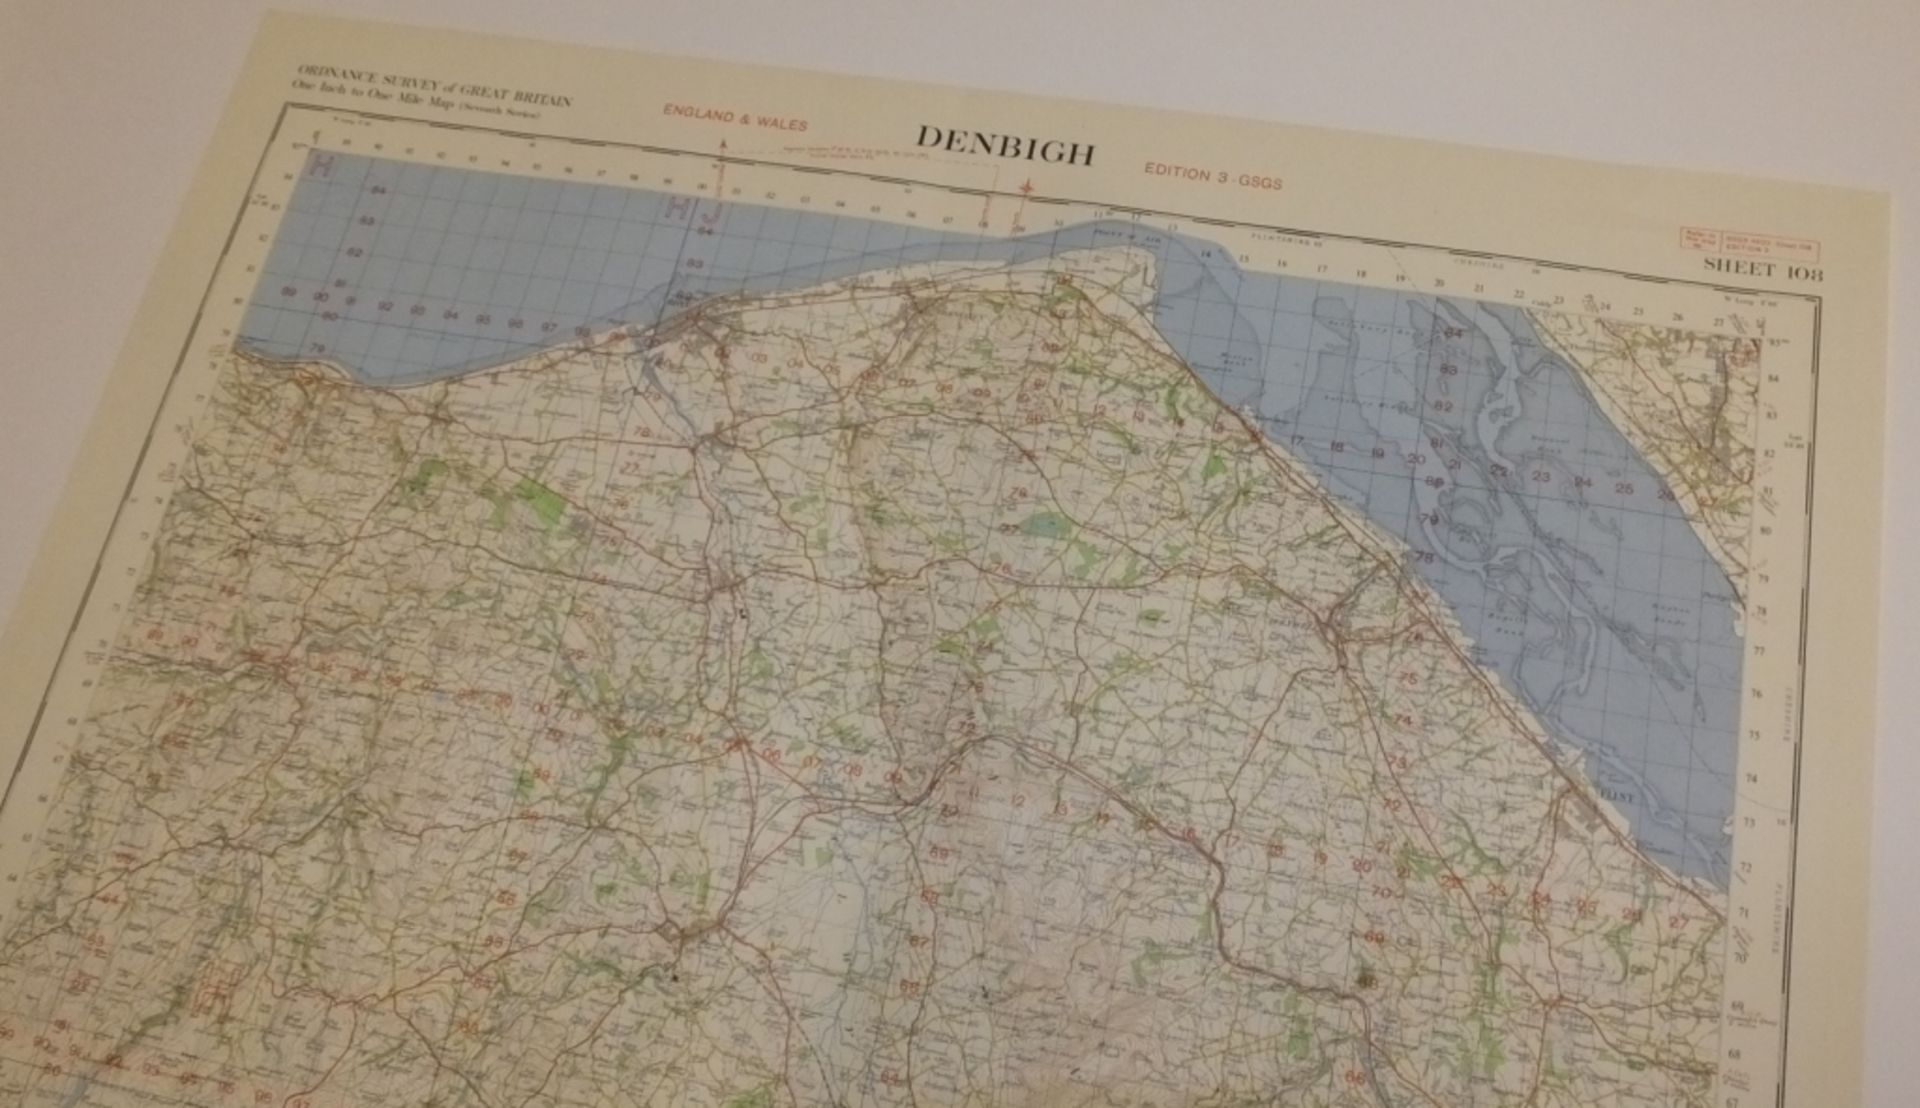 27x ENGLAND & WALES MAP DENBIGH 1INCH 1MILE 1955 3RD EDITION 3 GSGS SHEET 108 - Bild 2 aus 4